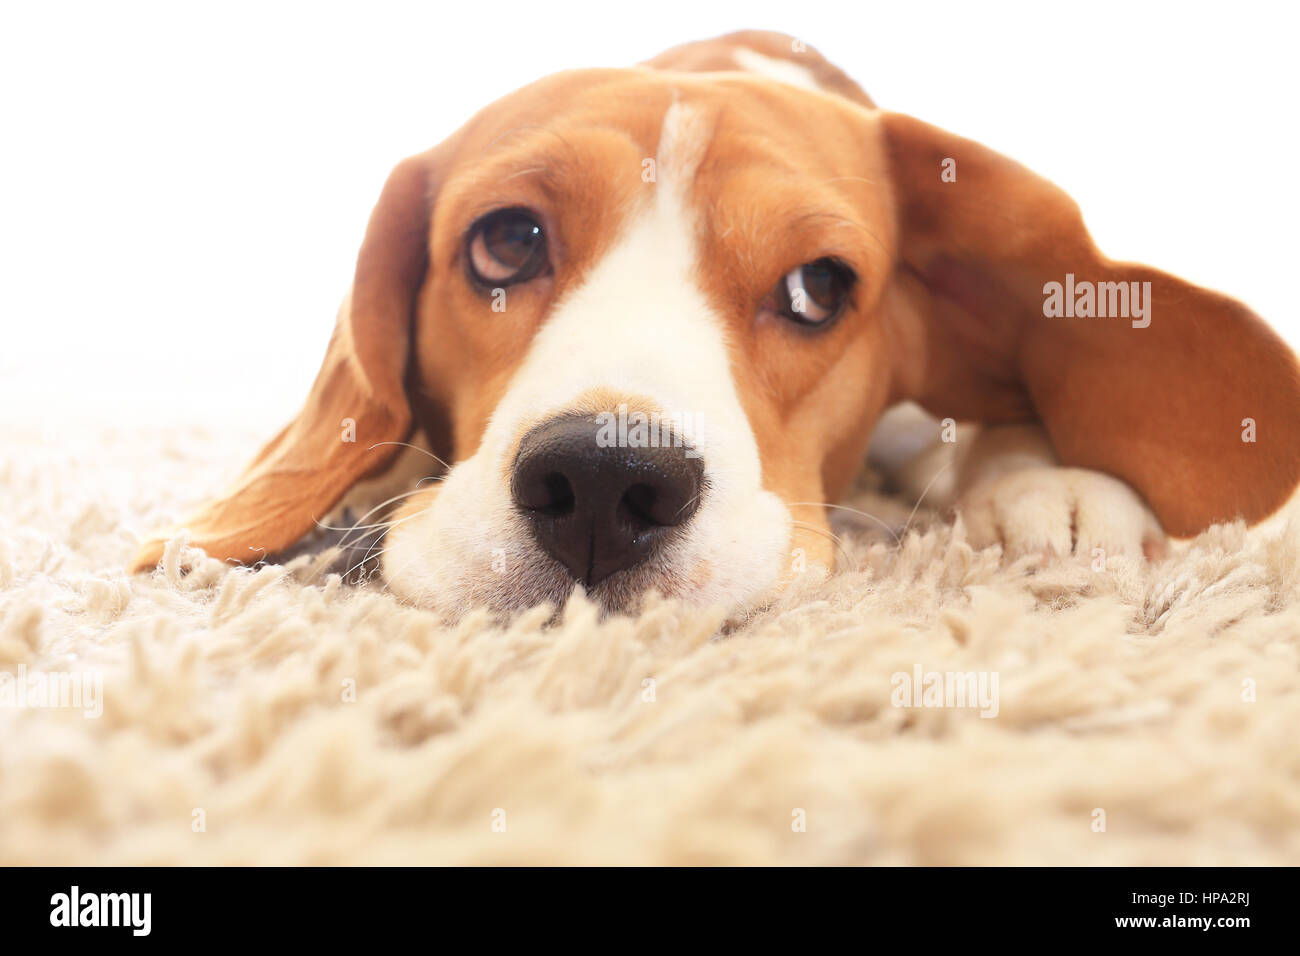 Sad dog on floor with big open eyes. Sick beagle  on carpet. Soft focus of dog with big ears on white background. Stock Photo